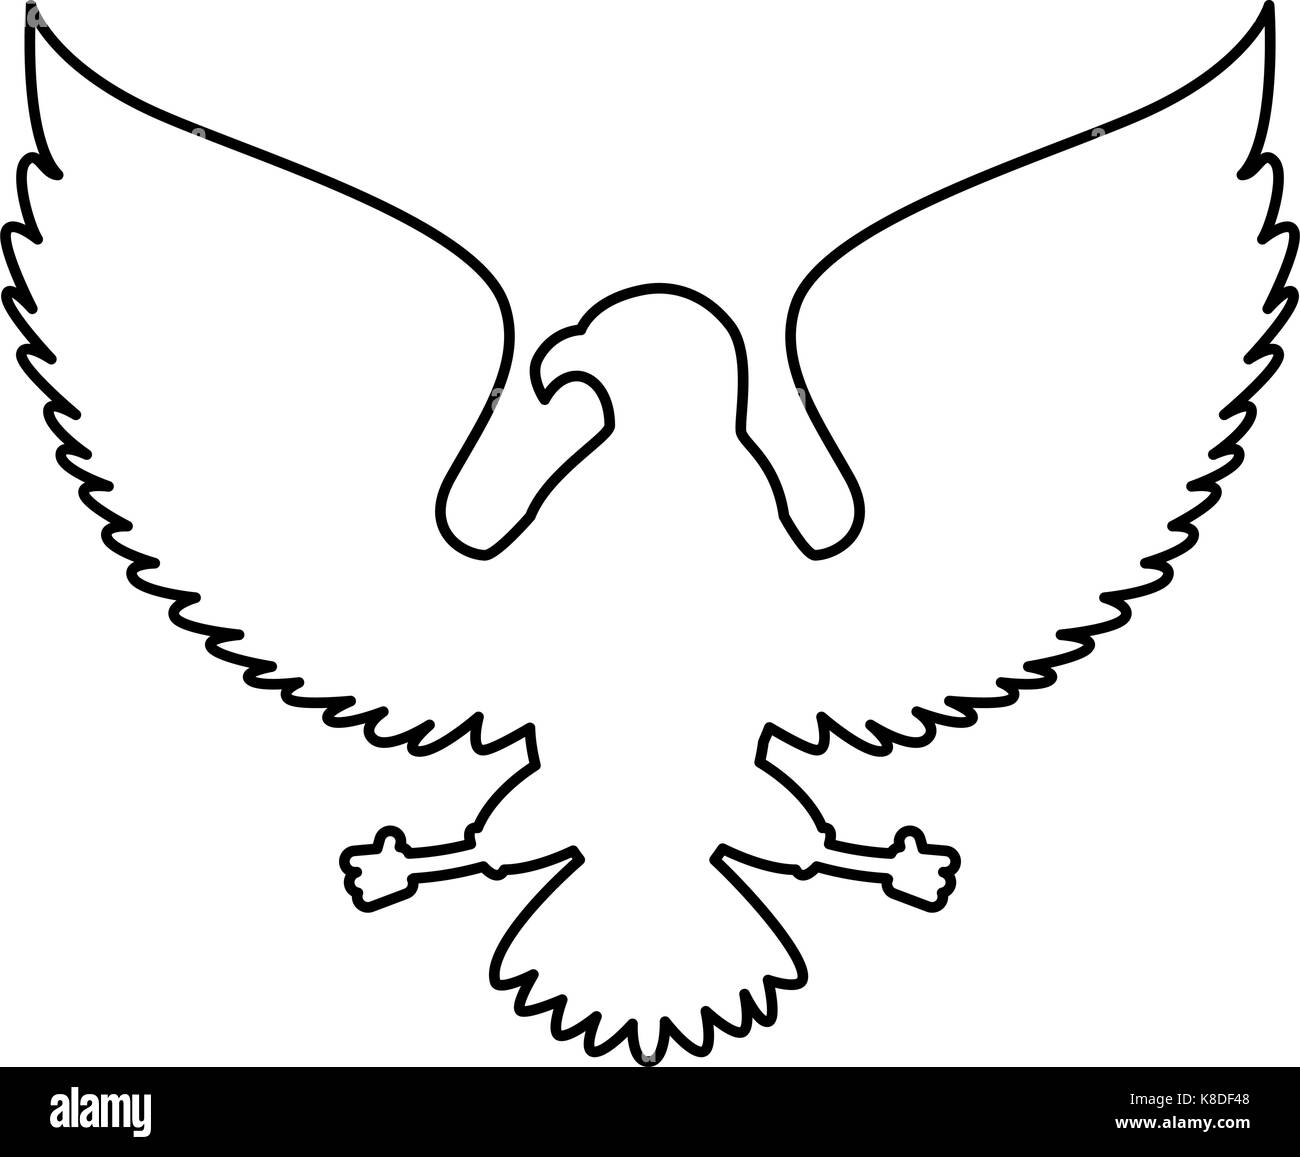 united states of america eagle vector illustration design Stock Vector